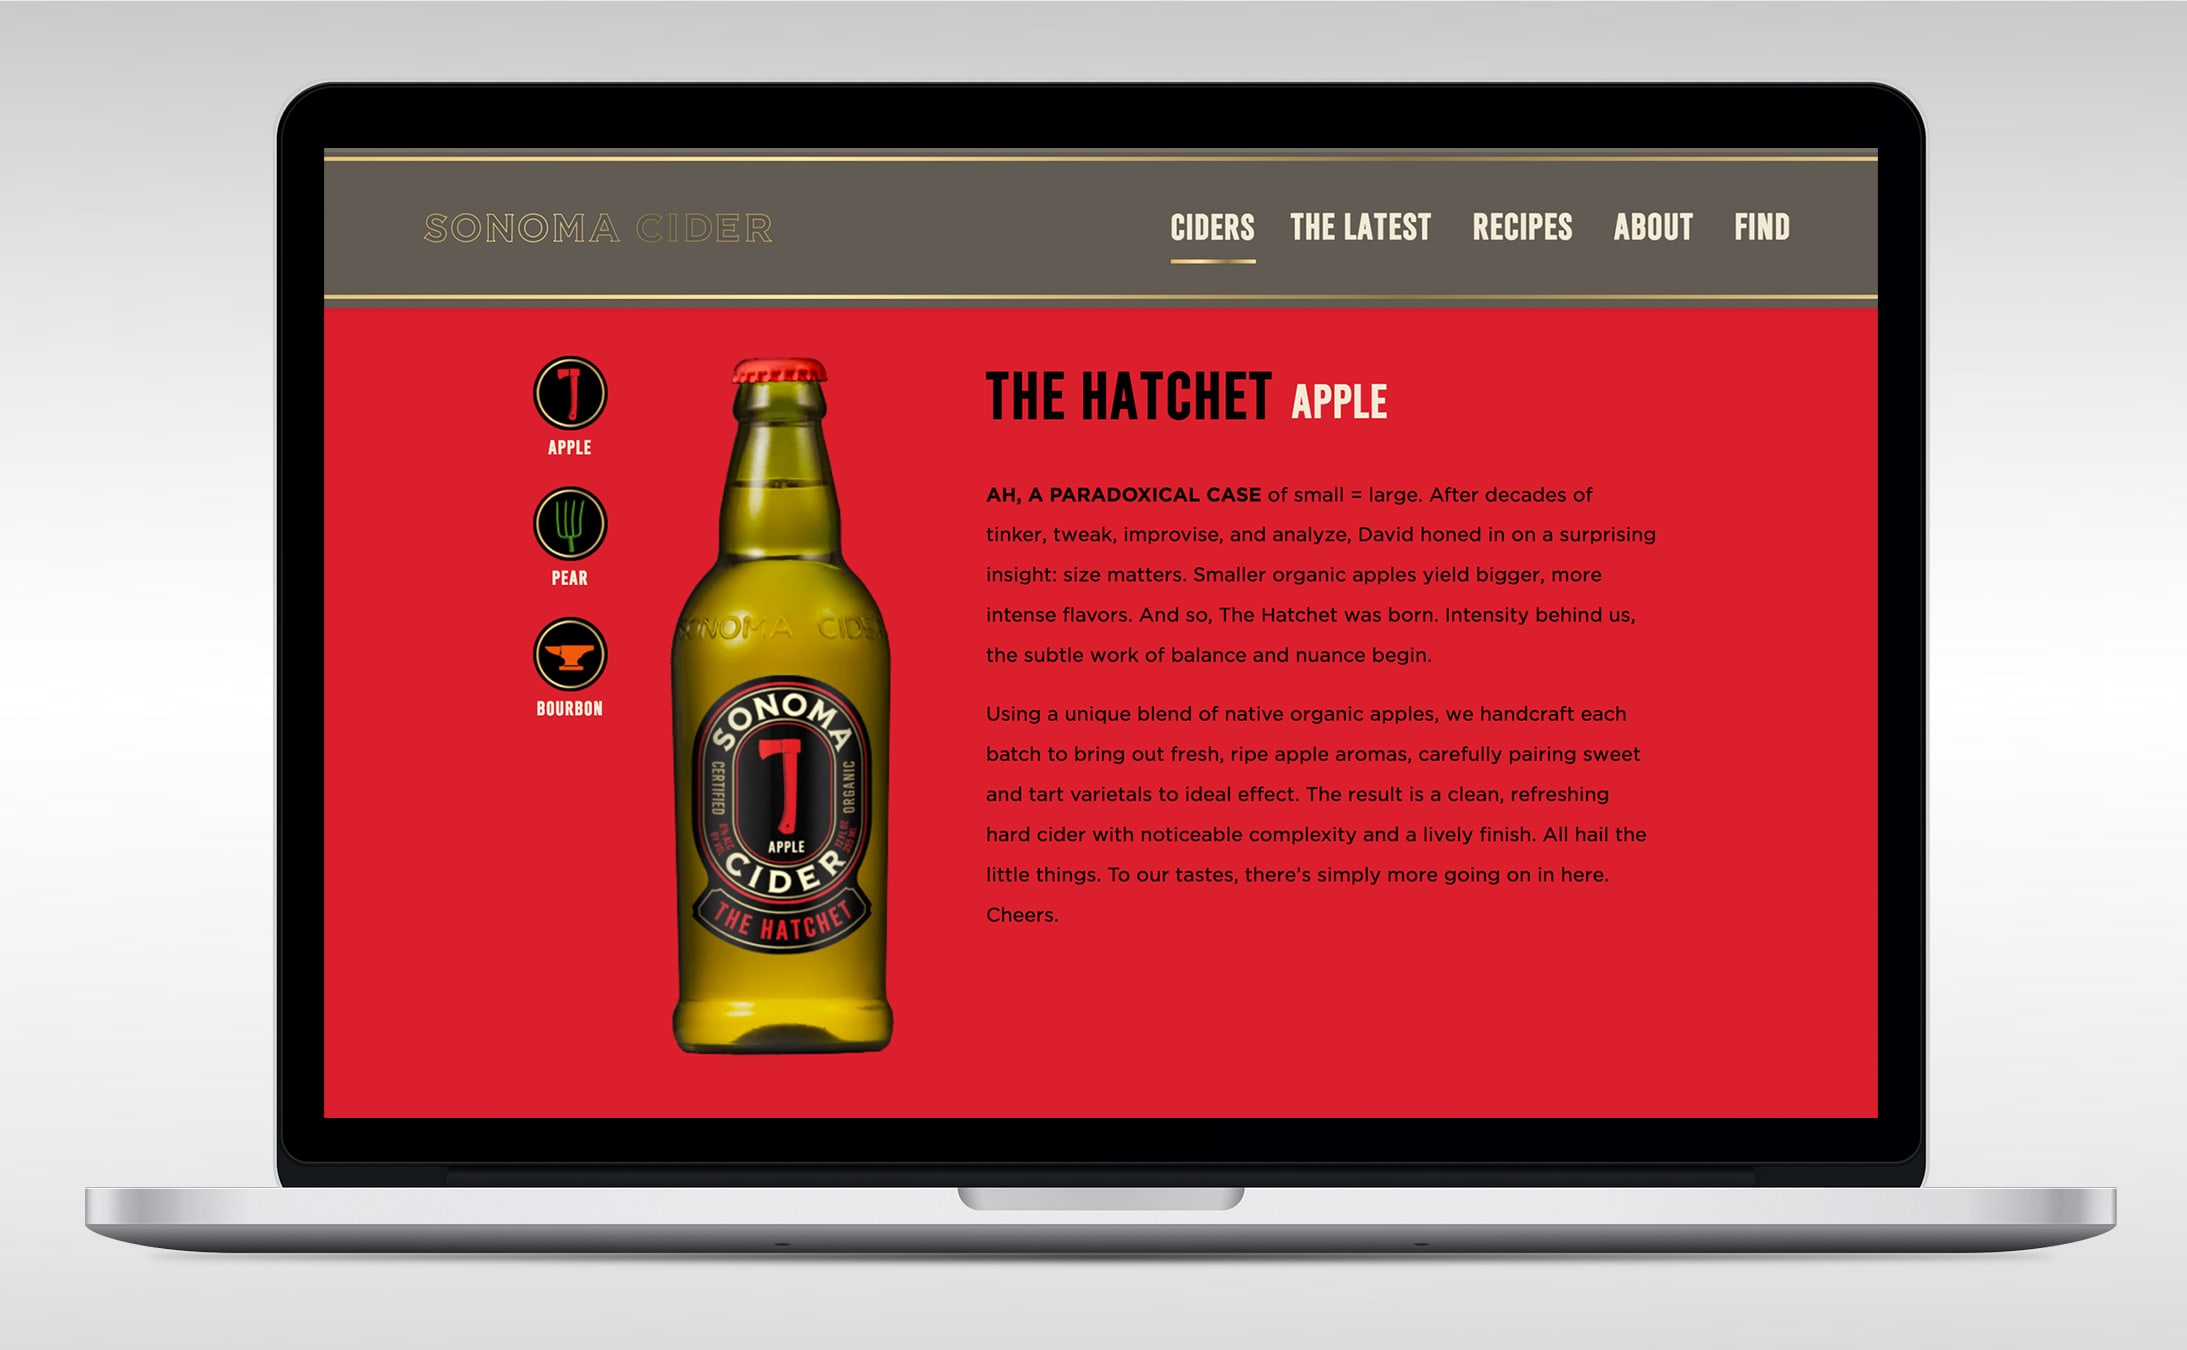 Sonoma Cider website design